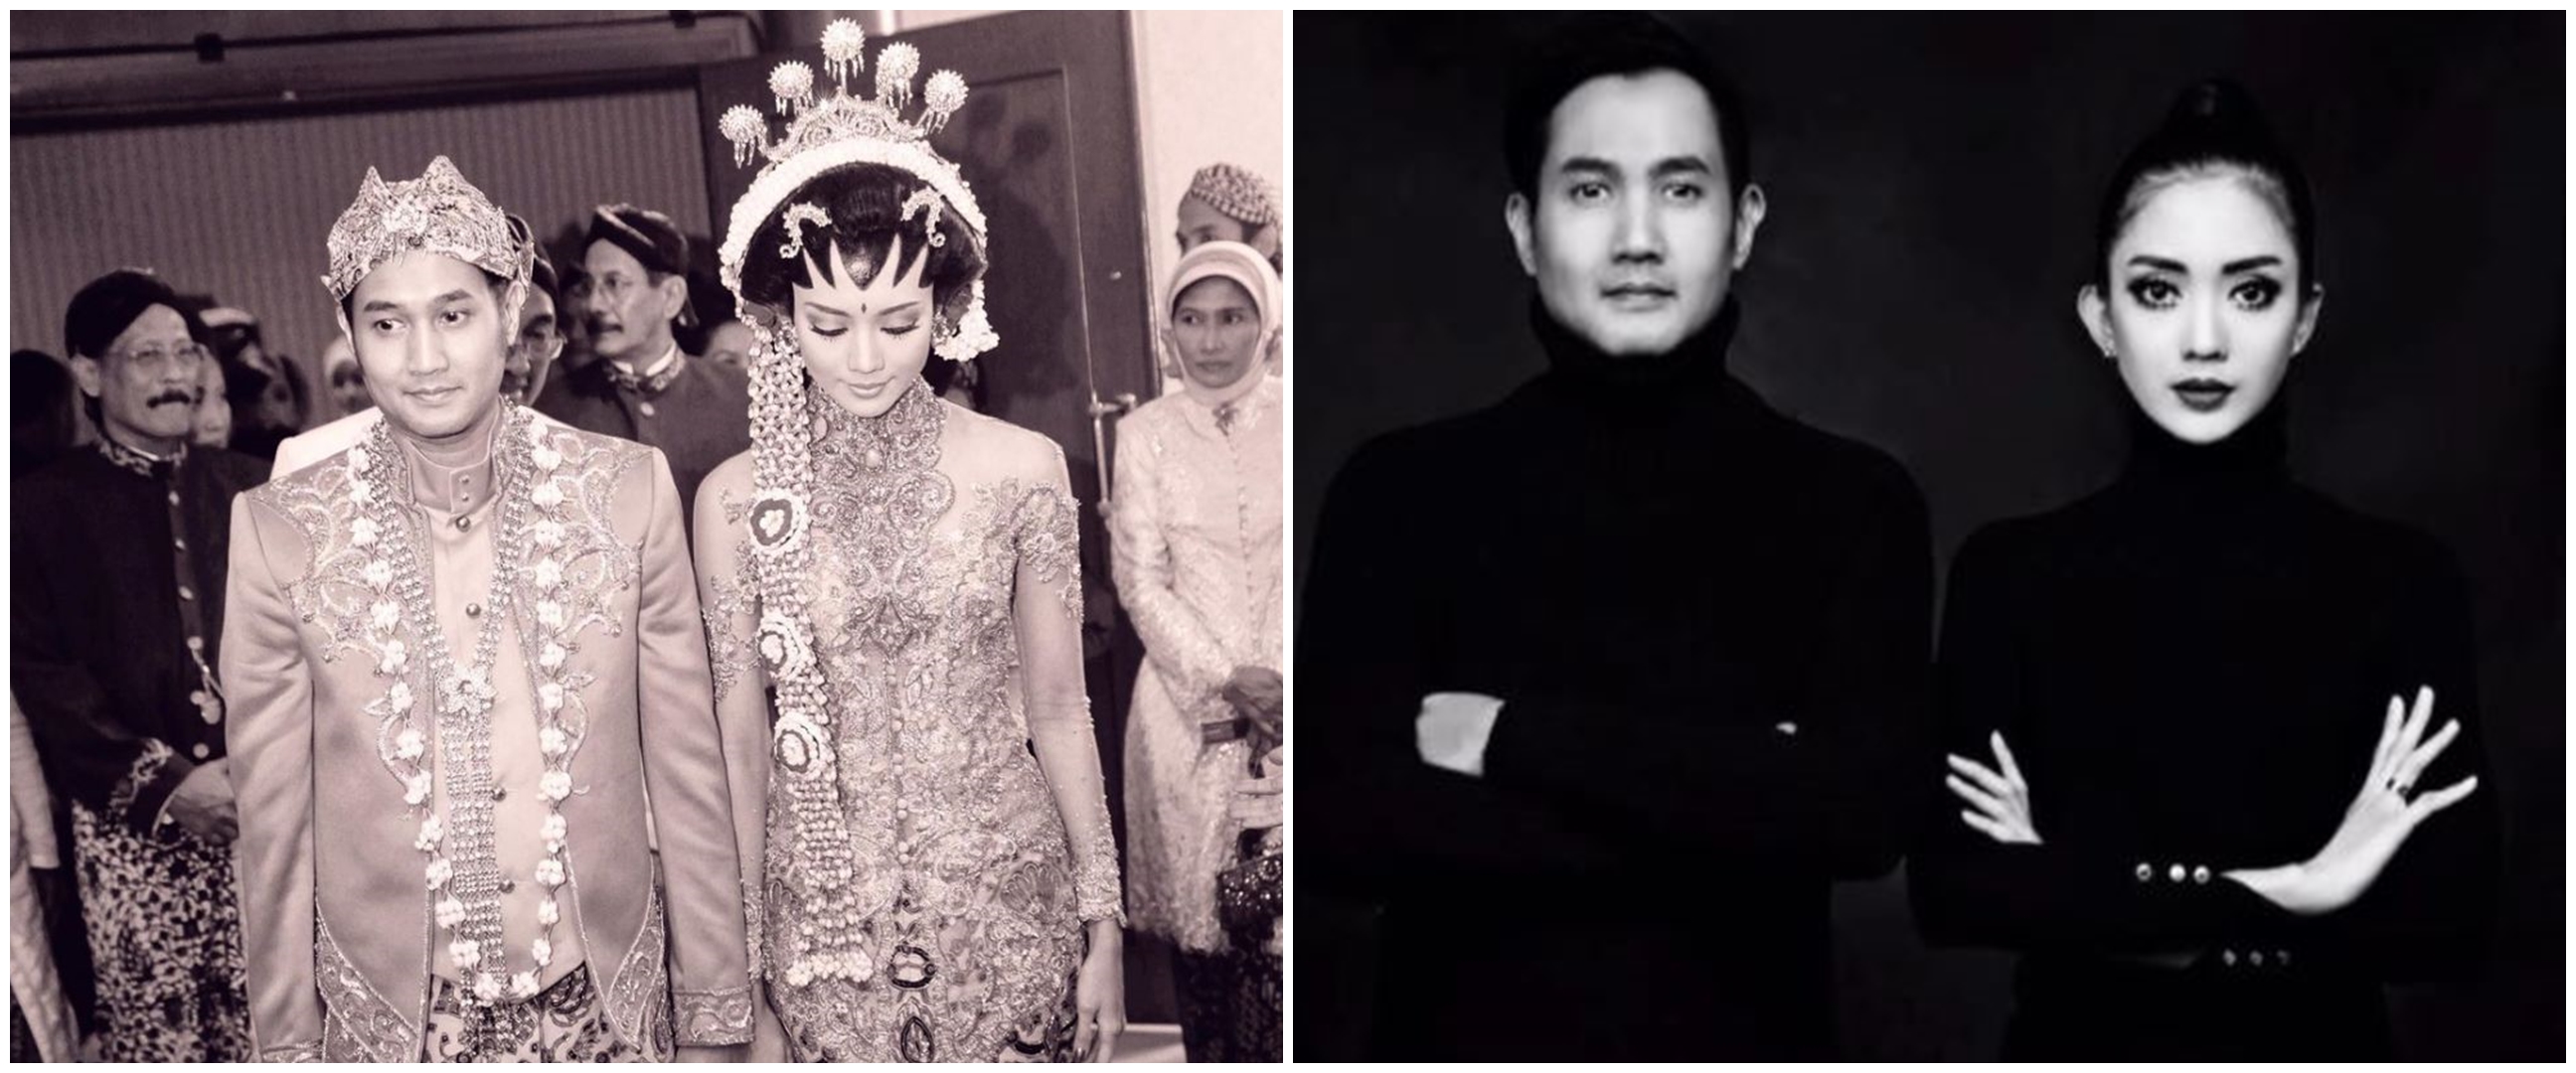 5 Fakta Ririn Dwi Ariyanti & Aldi resmi cerai, tak ada perselingkuhan